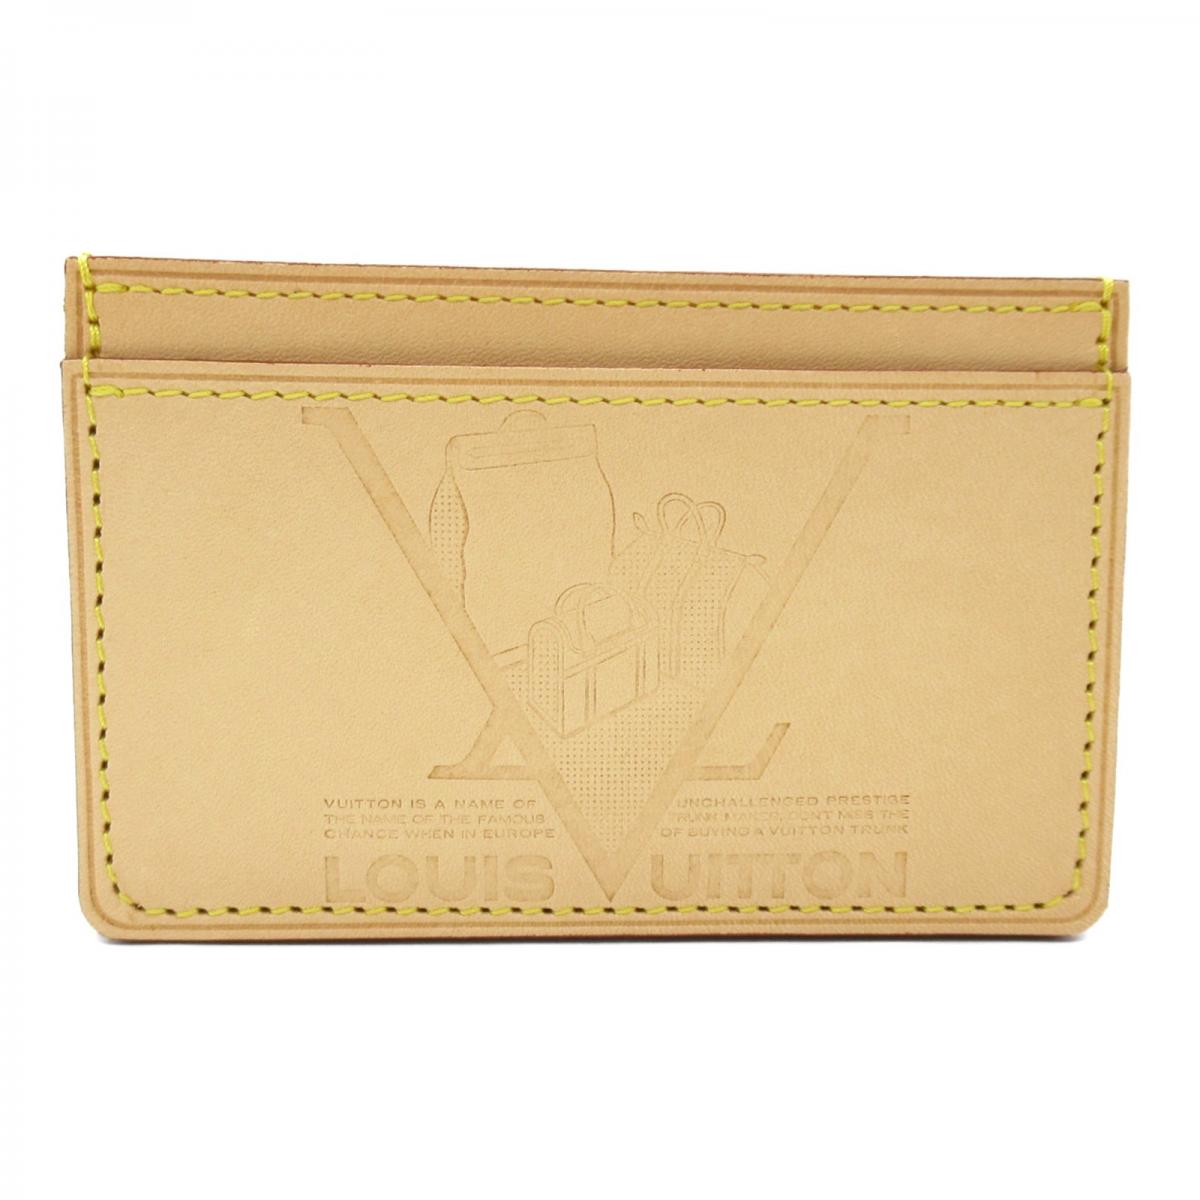 Louis Vuitton Vachetta Leather Voyages Card Holder Wallet